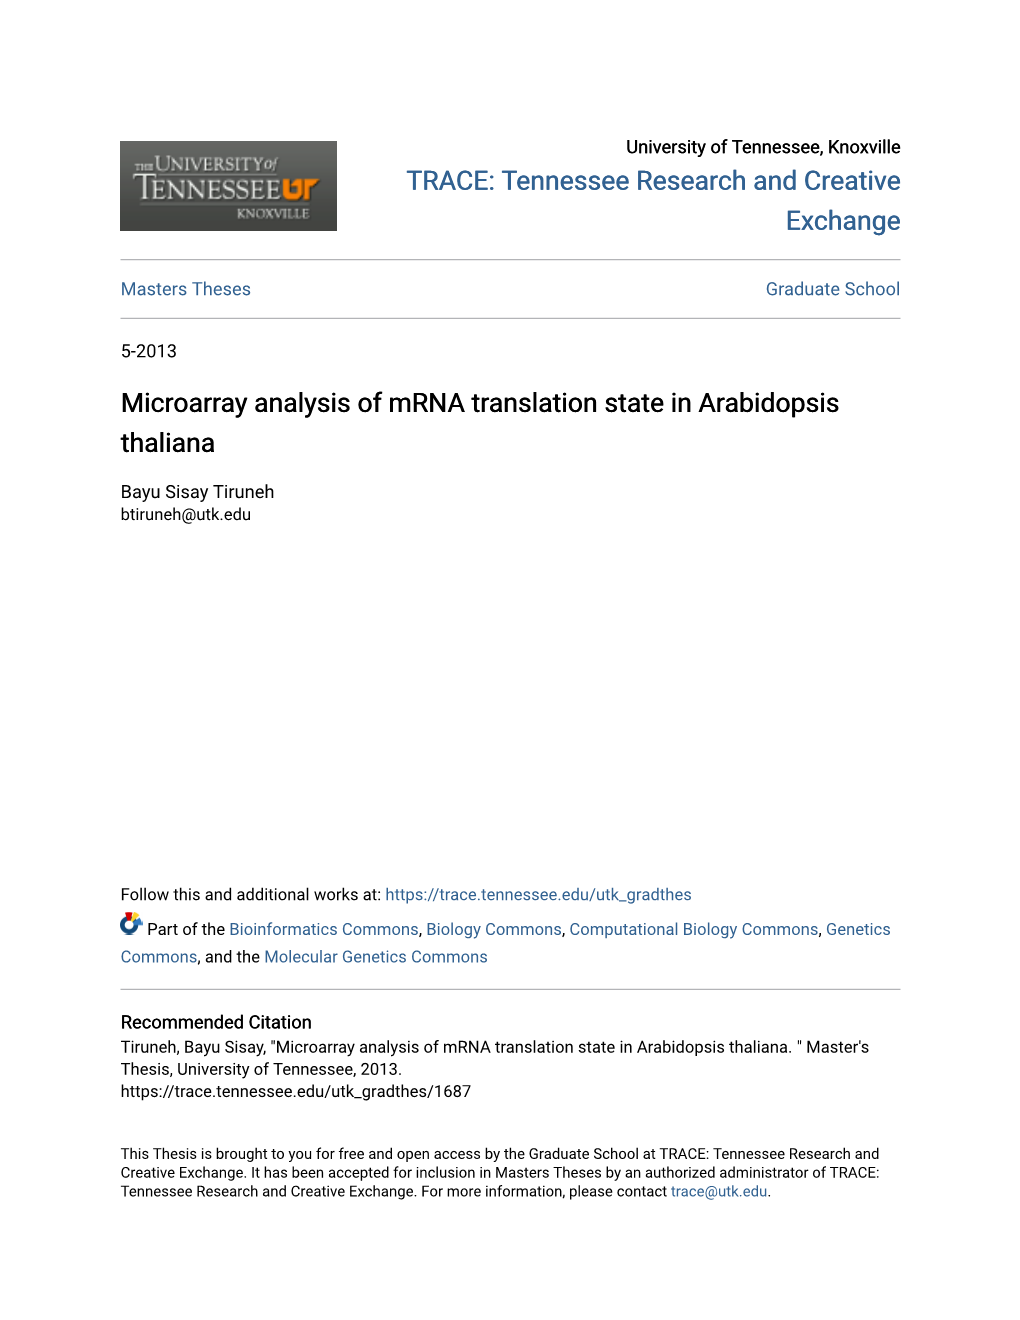 Microarray Analysis of Mrna Translation State in Arabidopsis Thaliana